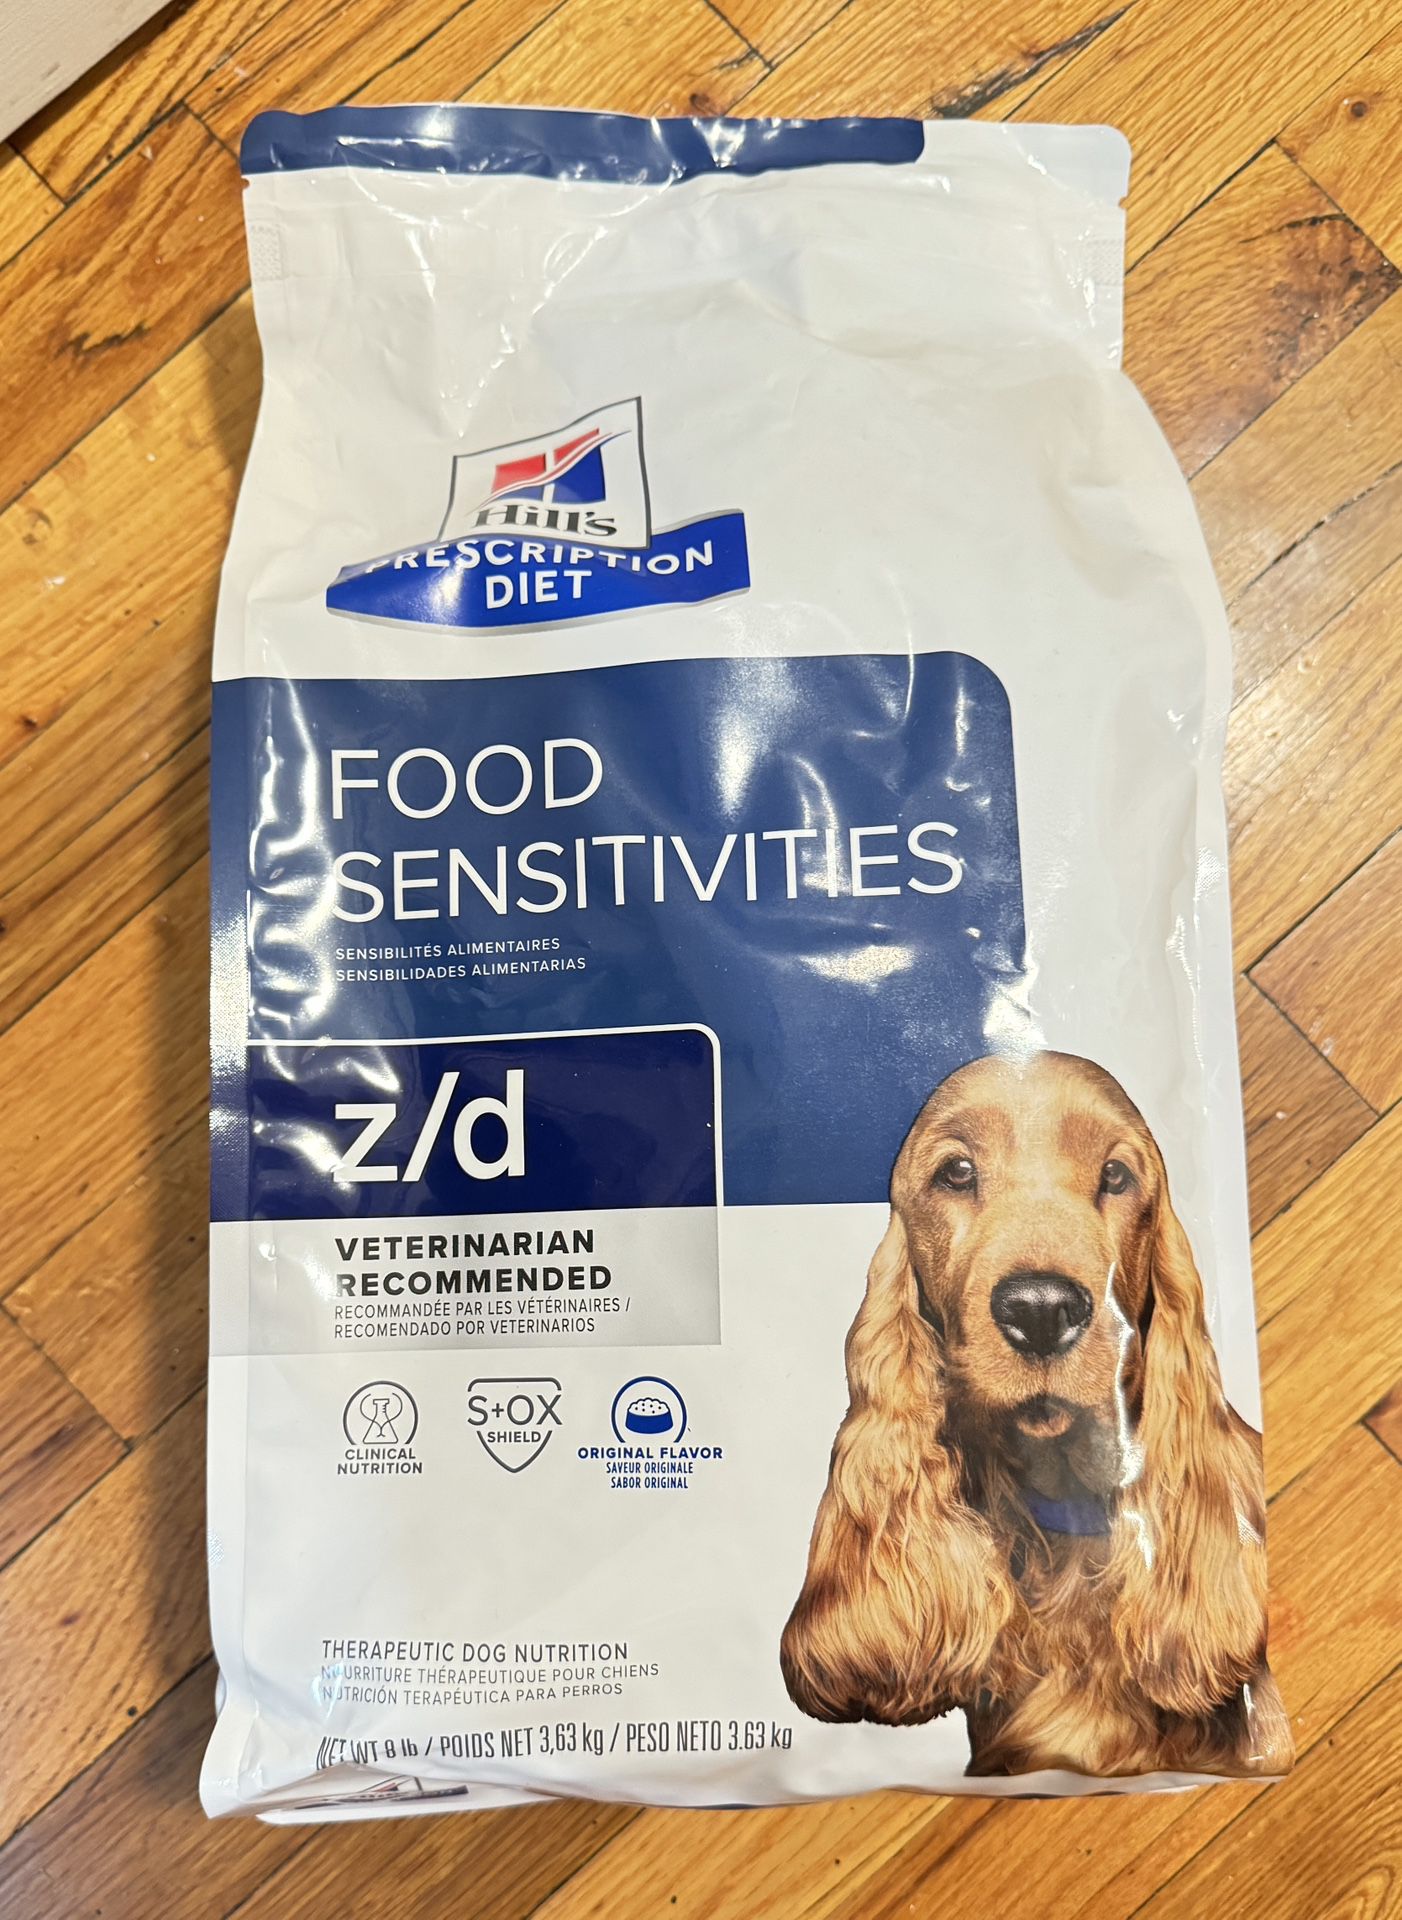 Food Sensitivities Original Flavor Dry Dog Food